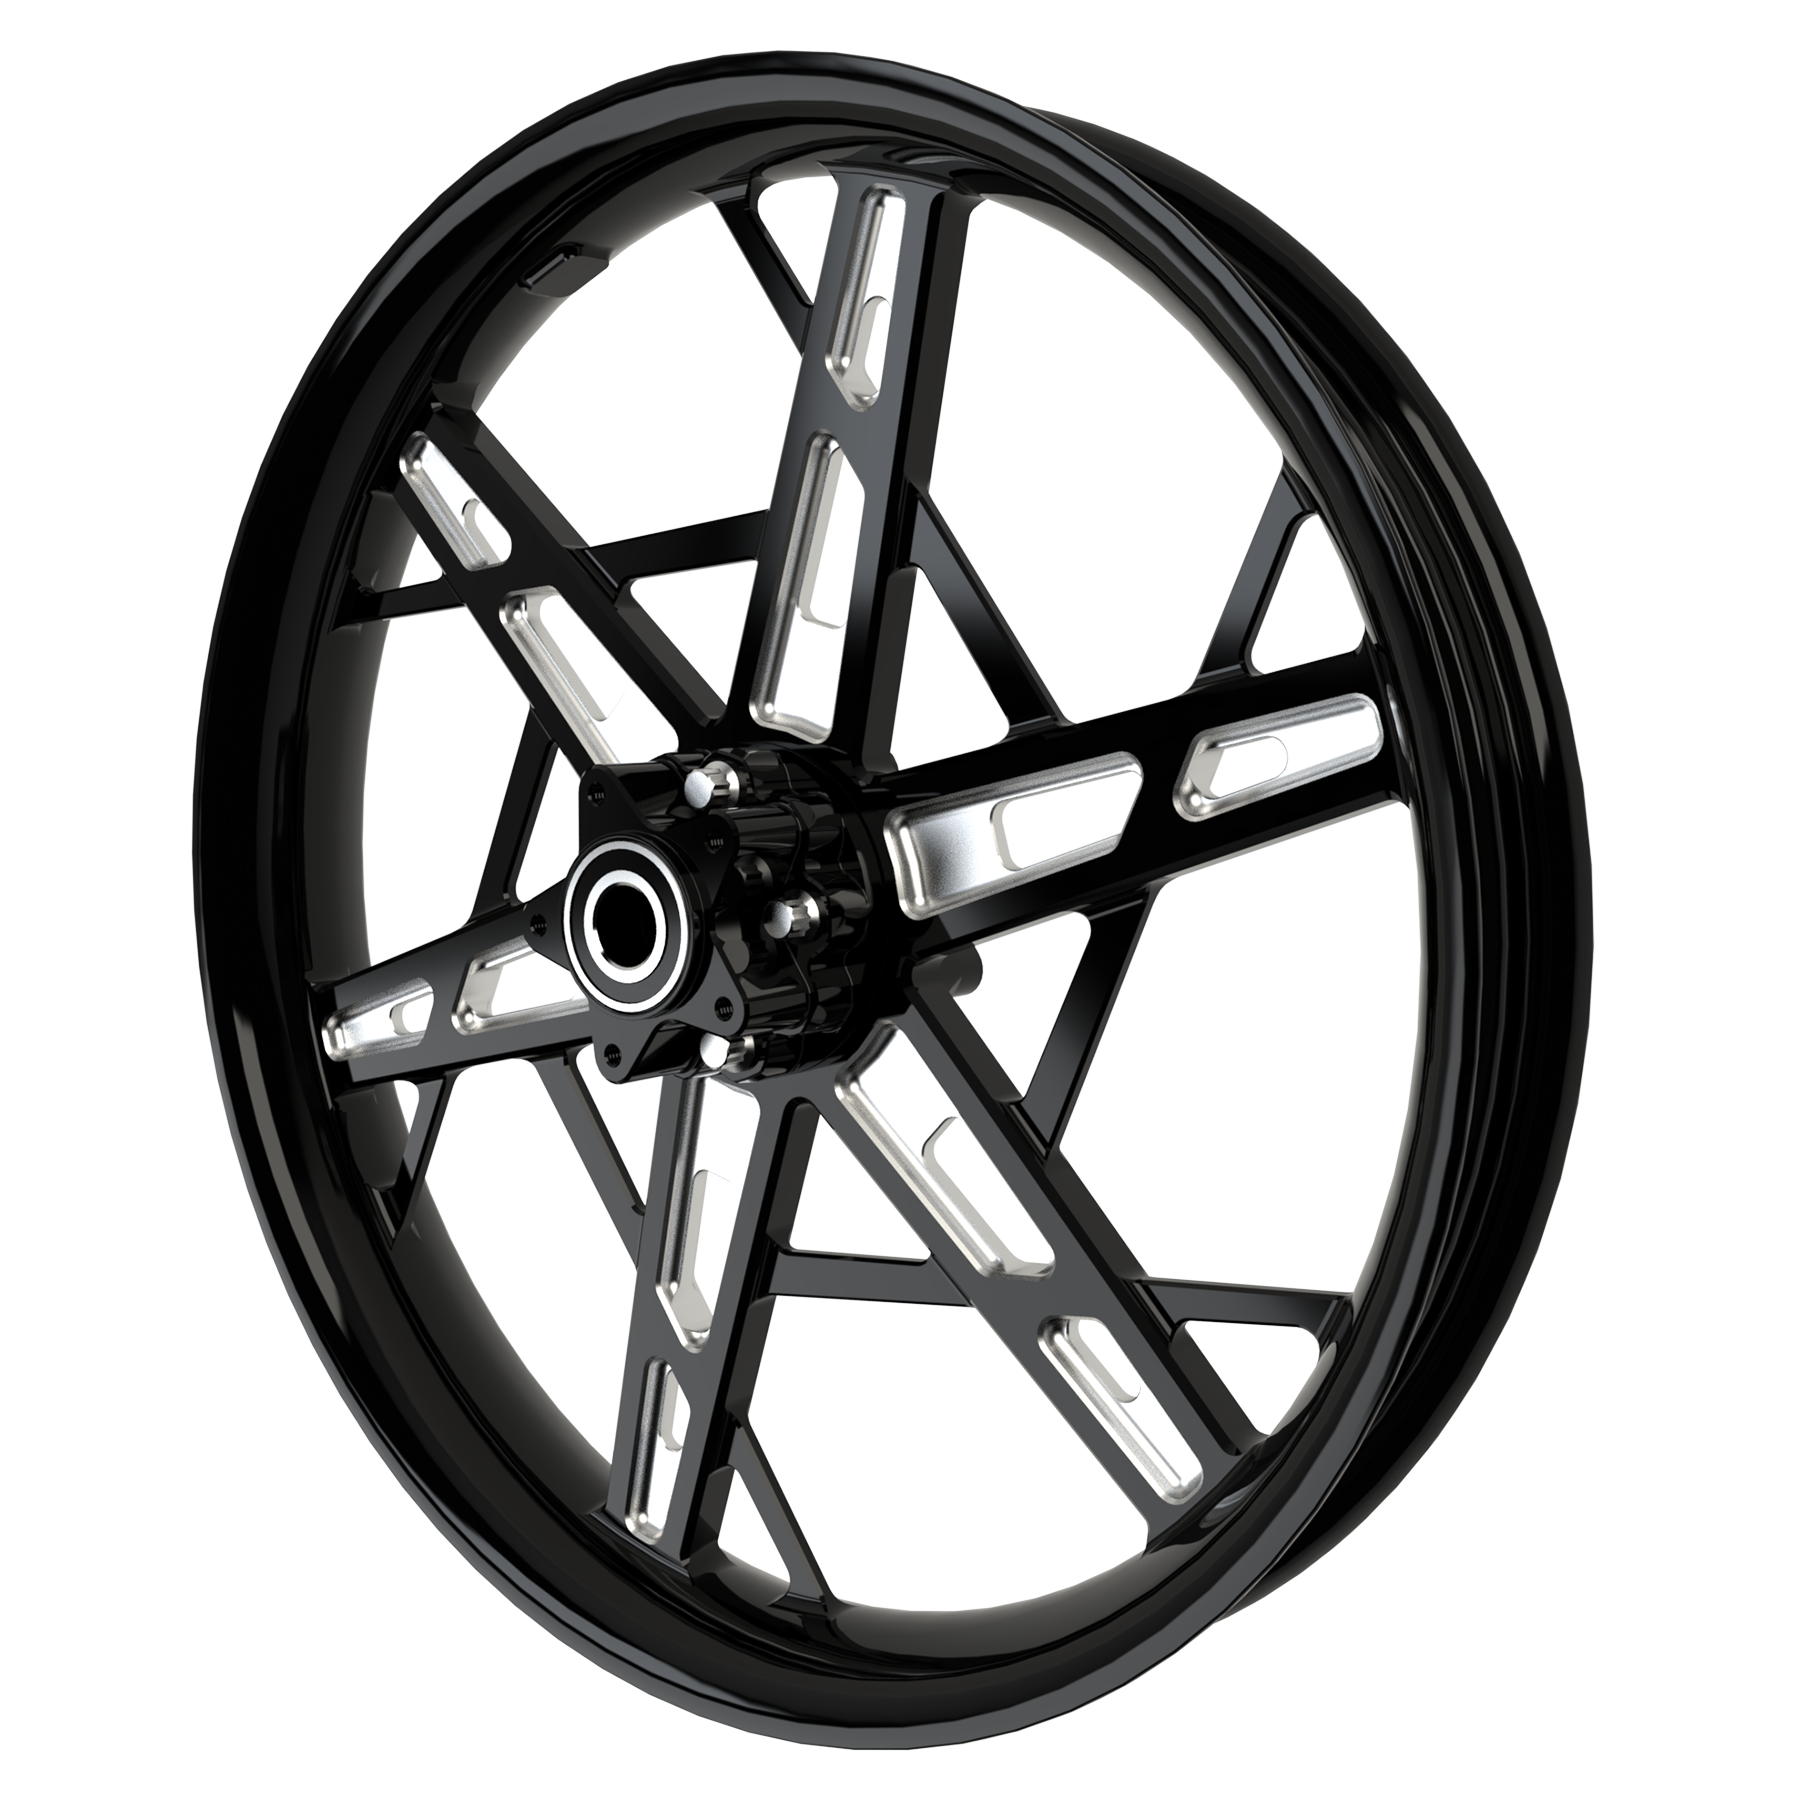 PS.06 custom motorycycle wheel in black double cut